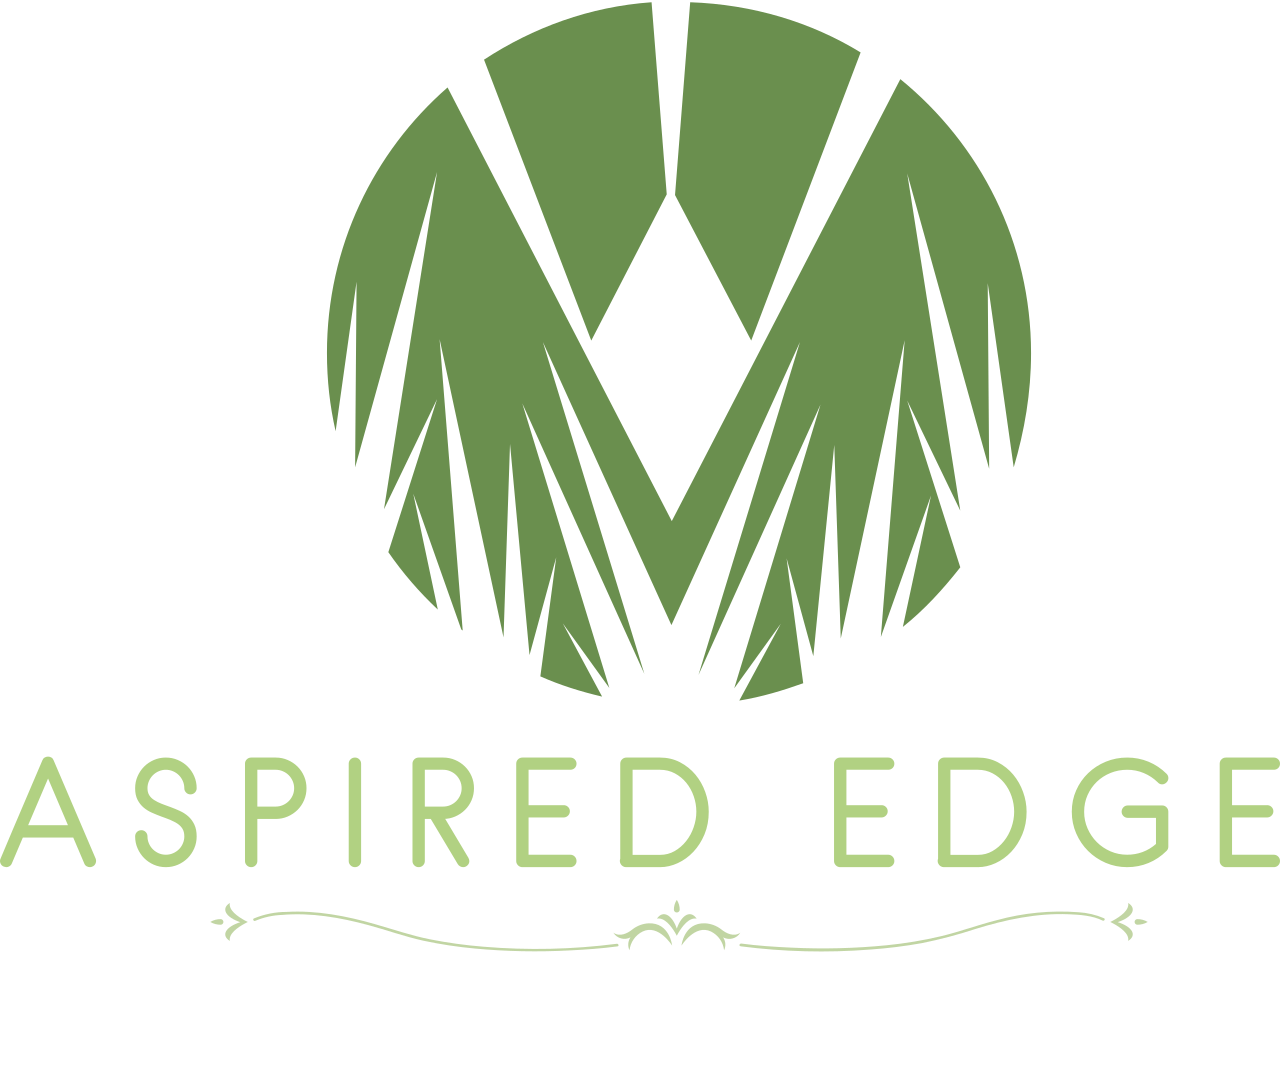 Aspired Edge Enterprise Landscaping 's web page